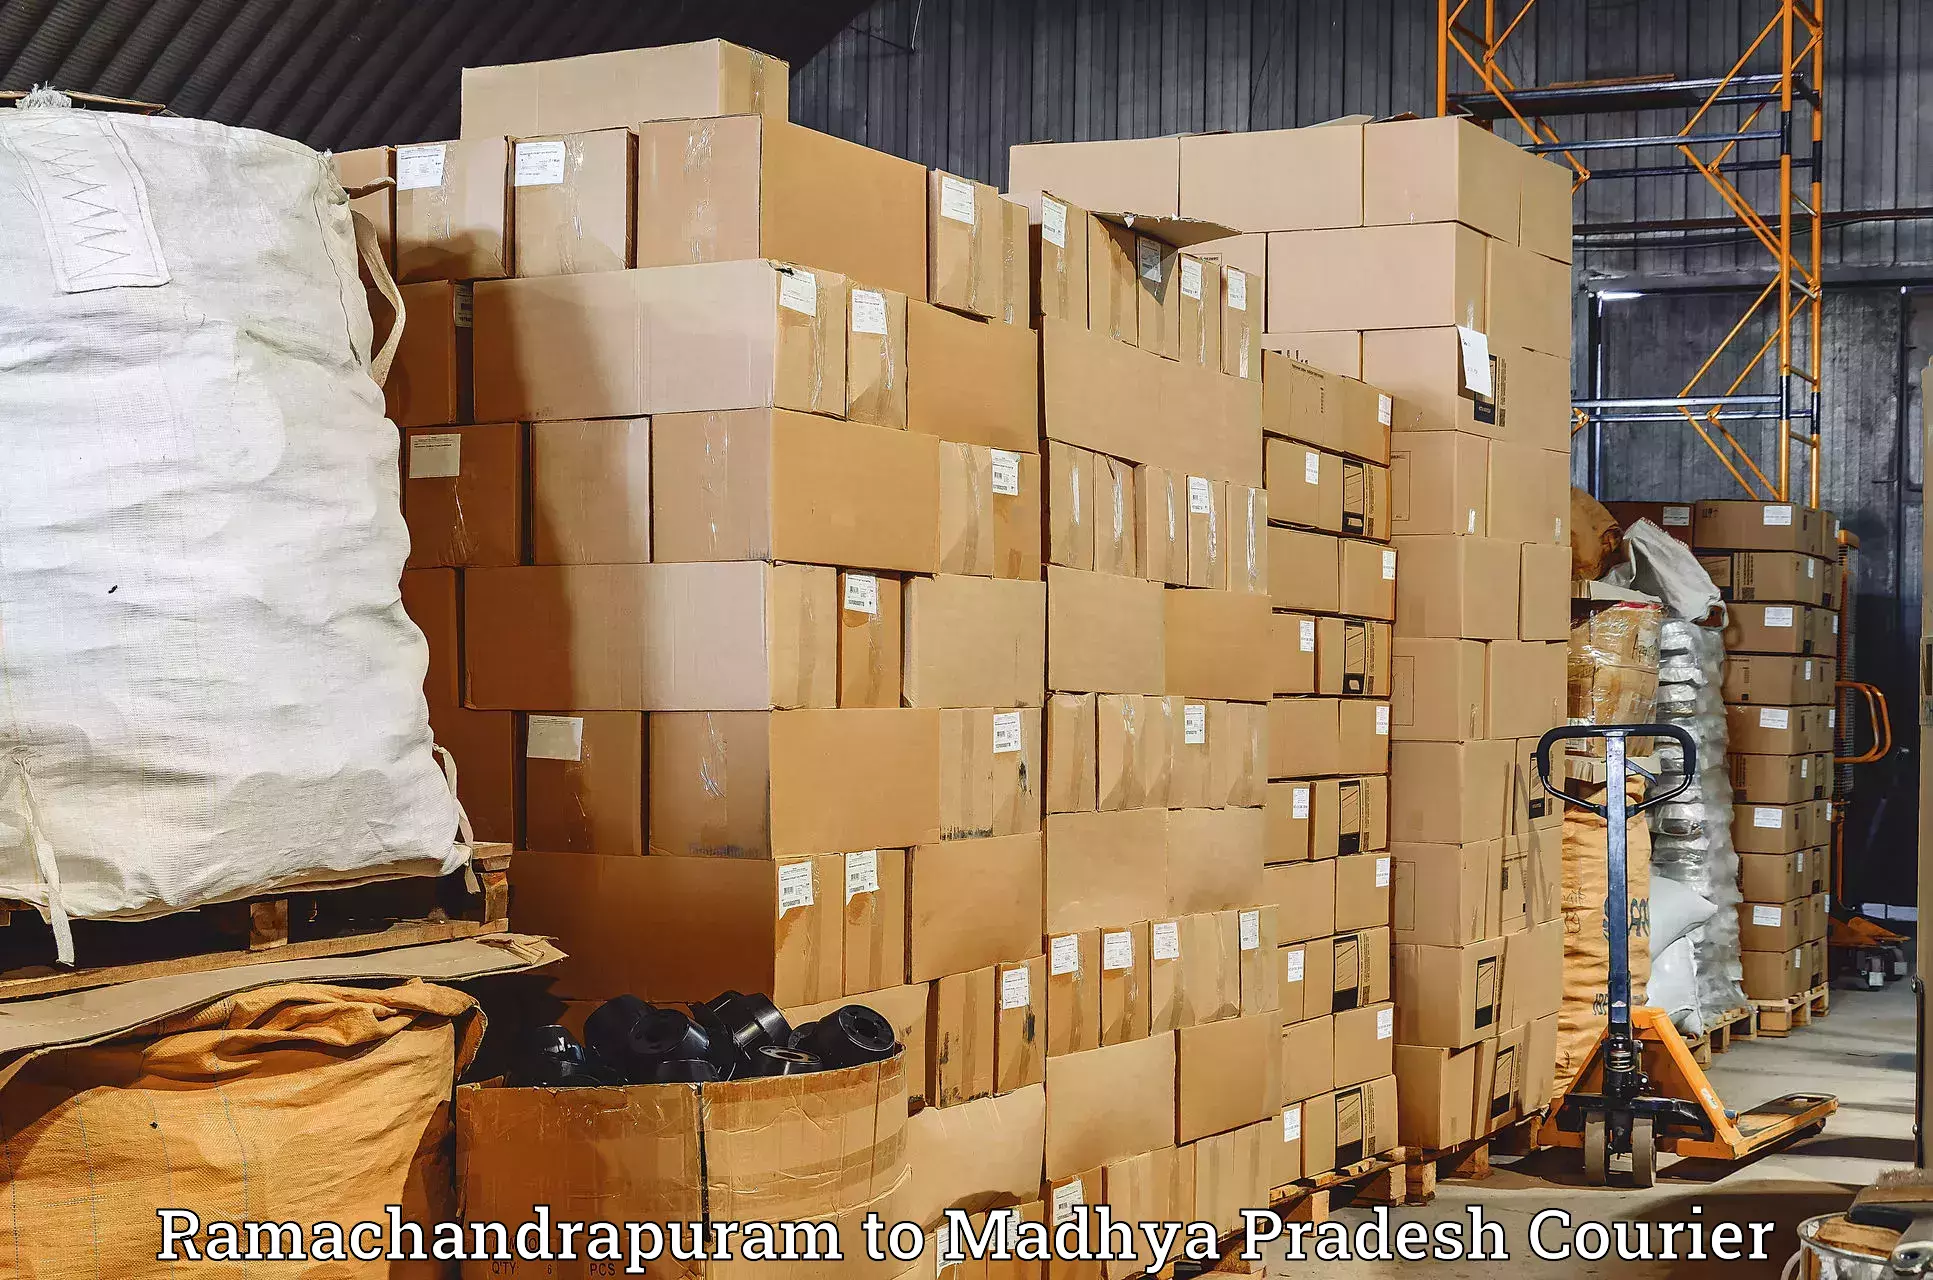 Express logistics providers Ramachandrapuram to Indore